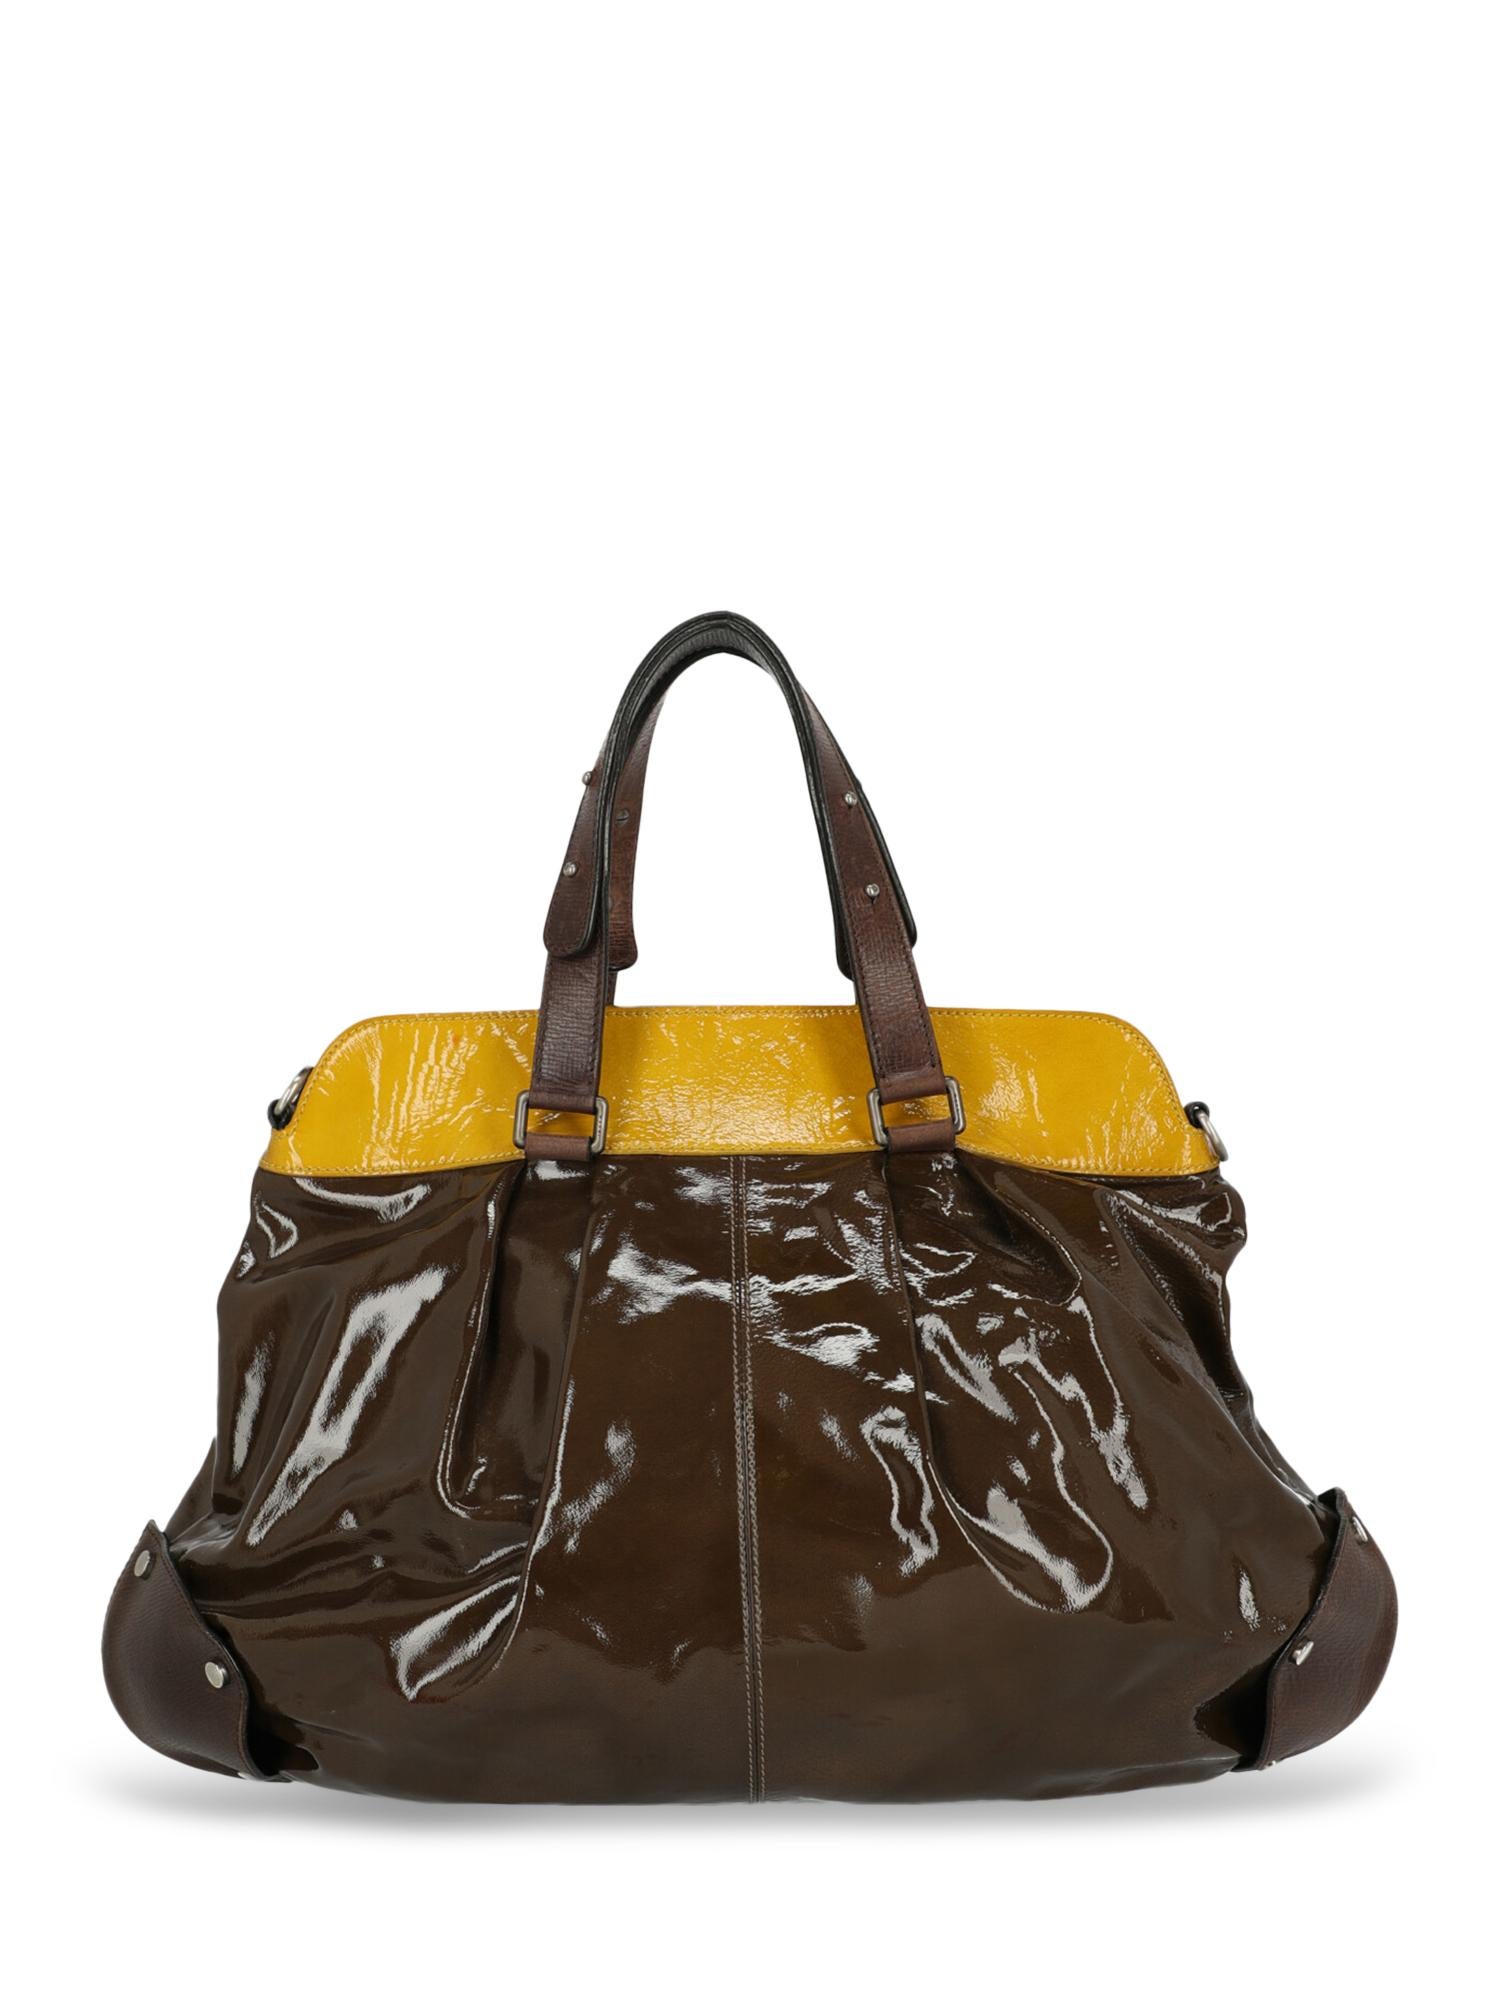 Marni Woman Handbag Brown  In Fair Condition For Sale In Milan, IT